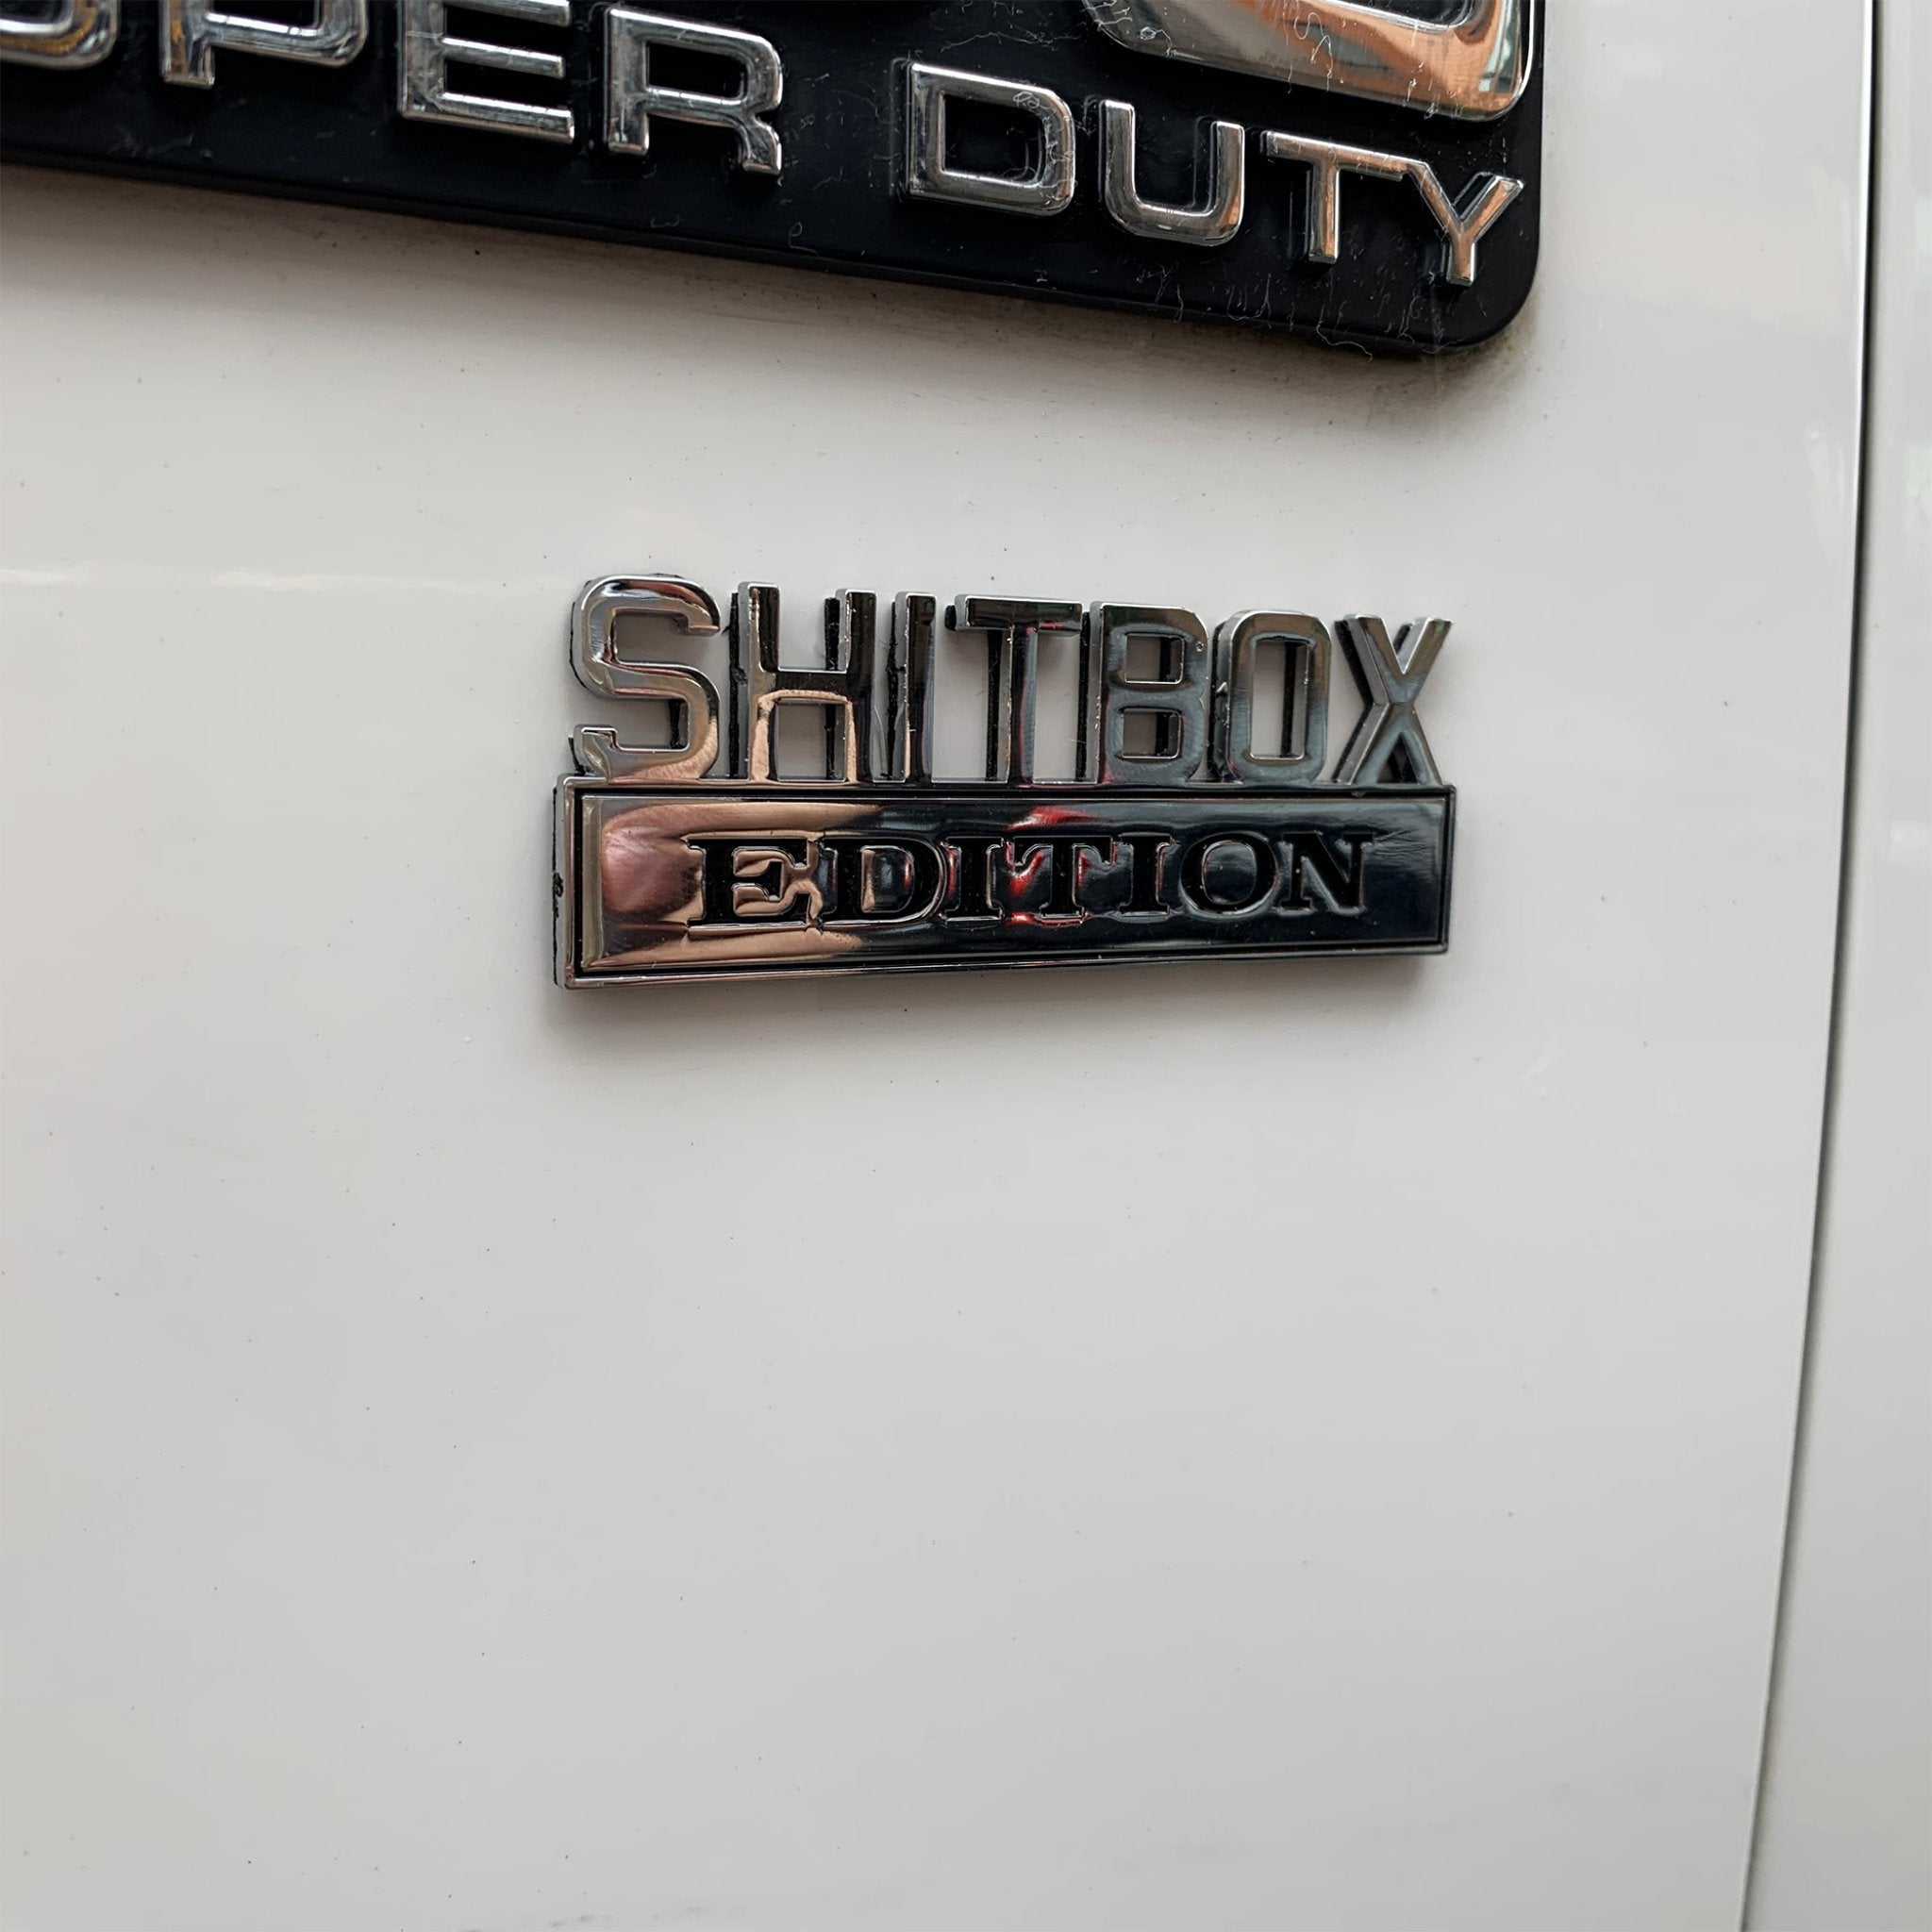 Emblema de guardabarros de edición Shitbox de Metal cromado, insignia para coche, camión, portón trasero, maletero